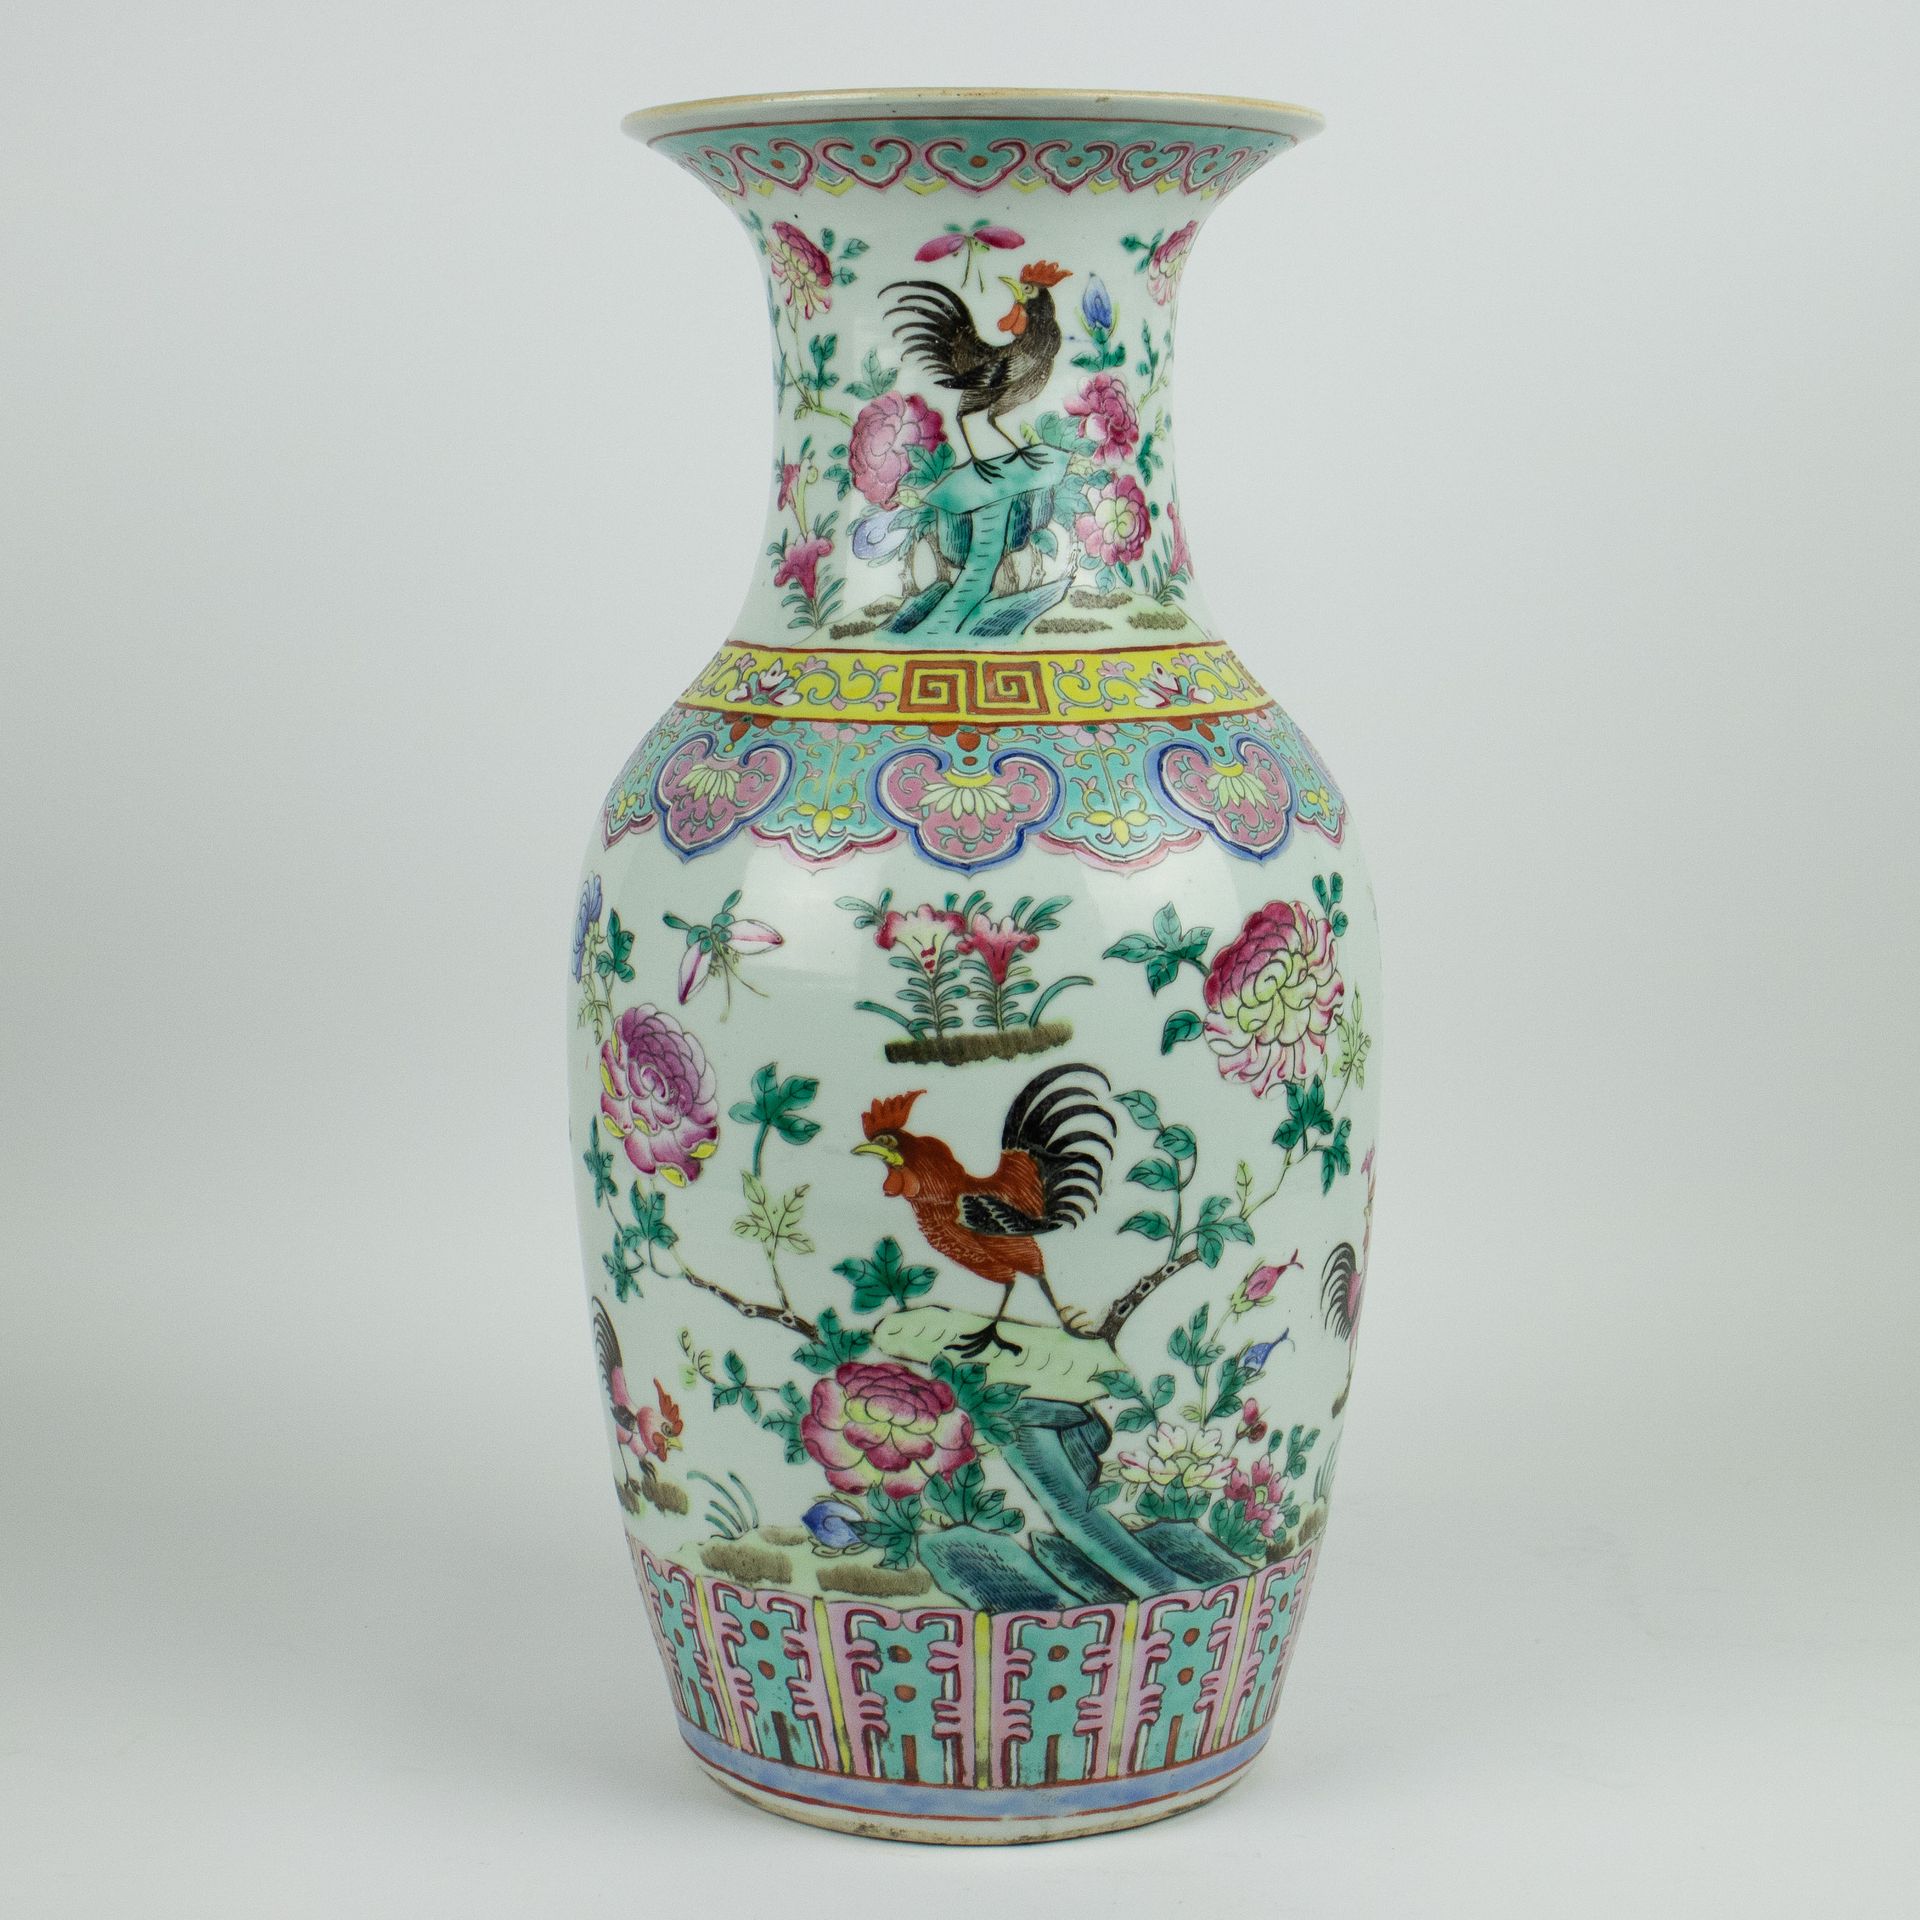 A Chinese vase famille rose 19th century 装饰有公鸡和鲜花。
，高44.5，是19世纪中国的玫瑰花瓶。